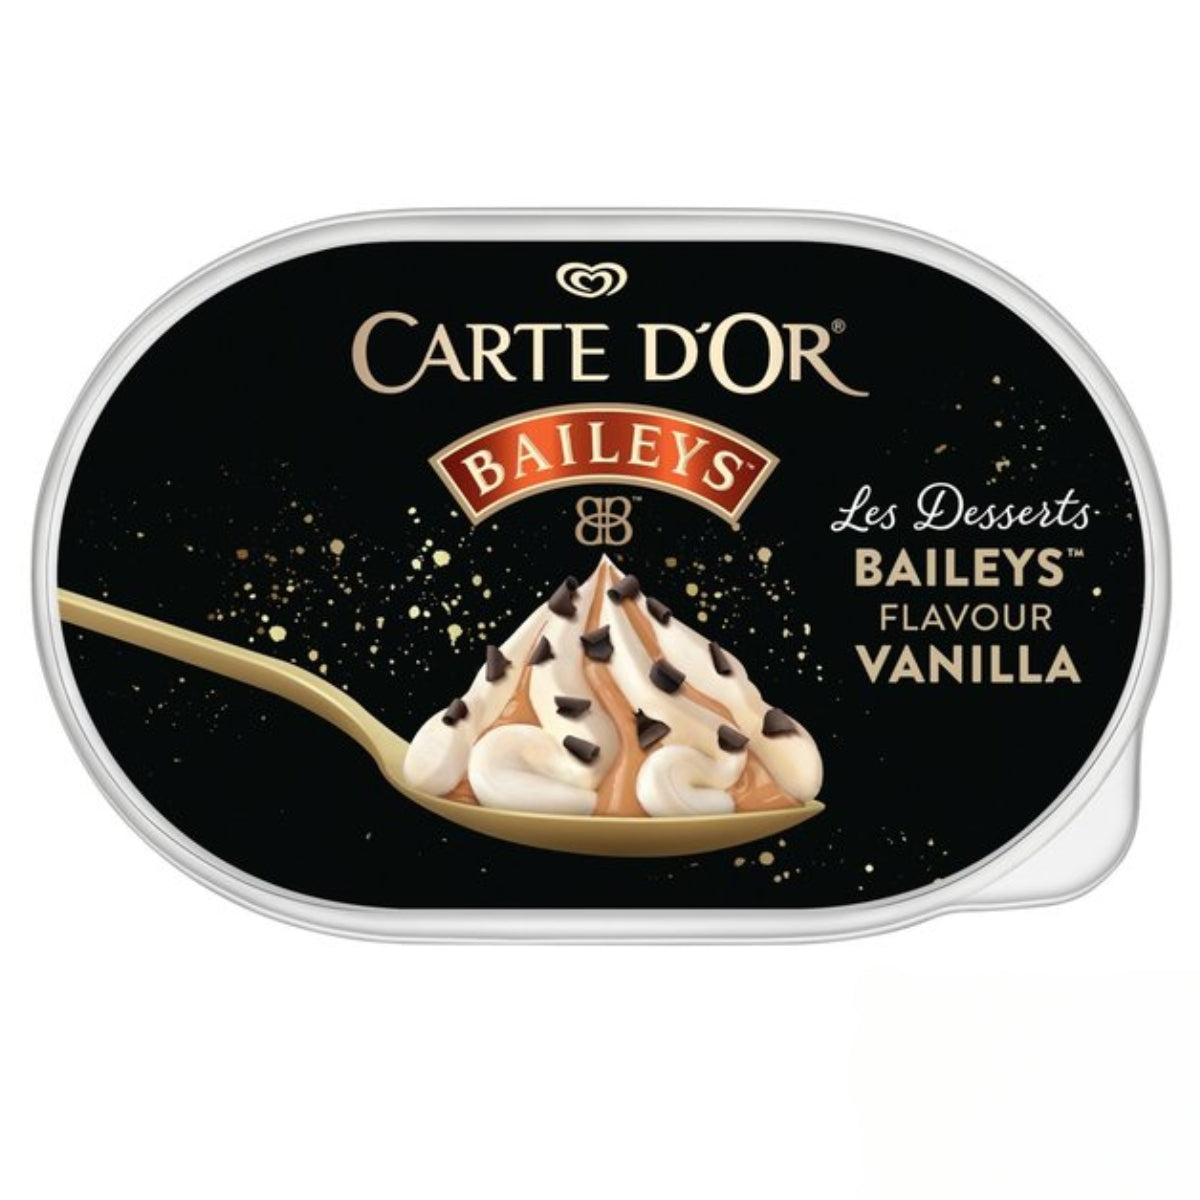 Carte Dor - Baileys Flavour Vanilla - 485g ice cream.